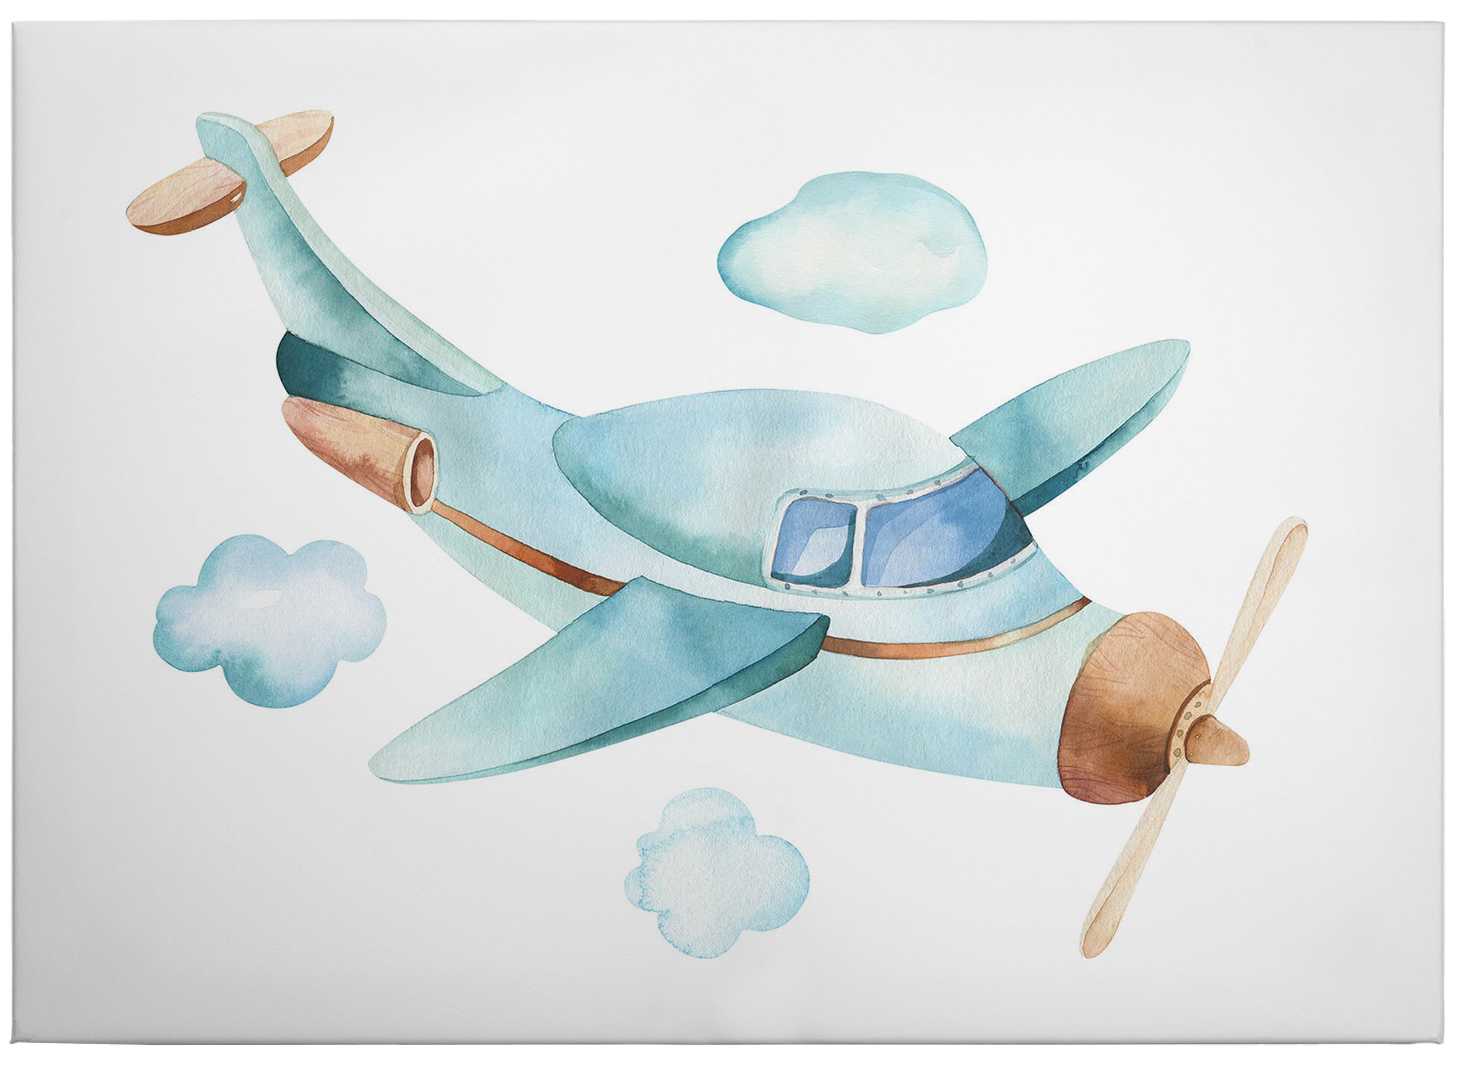             Canvas print aeroplane watercolour clouds sky by kvilis
        